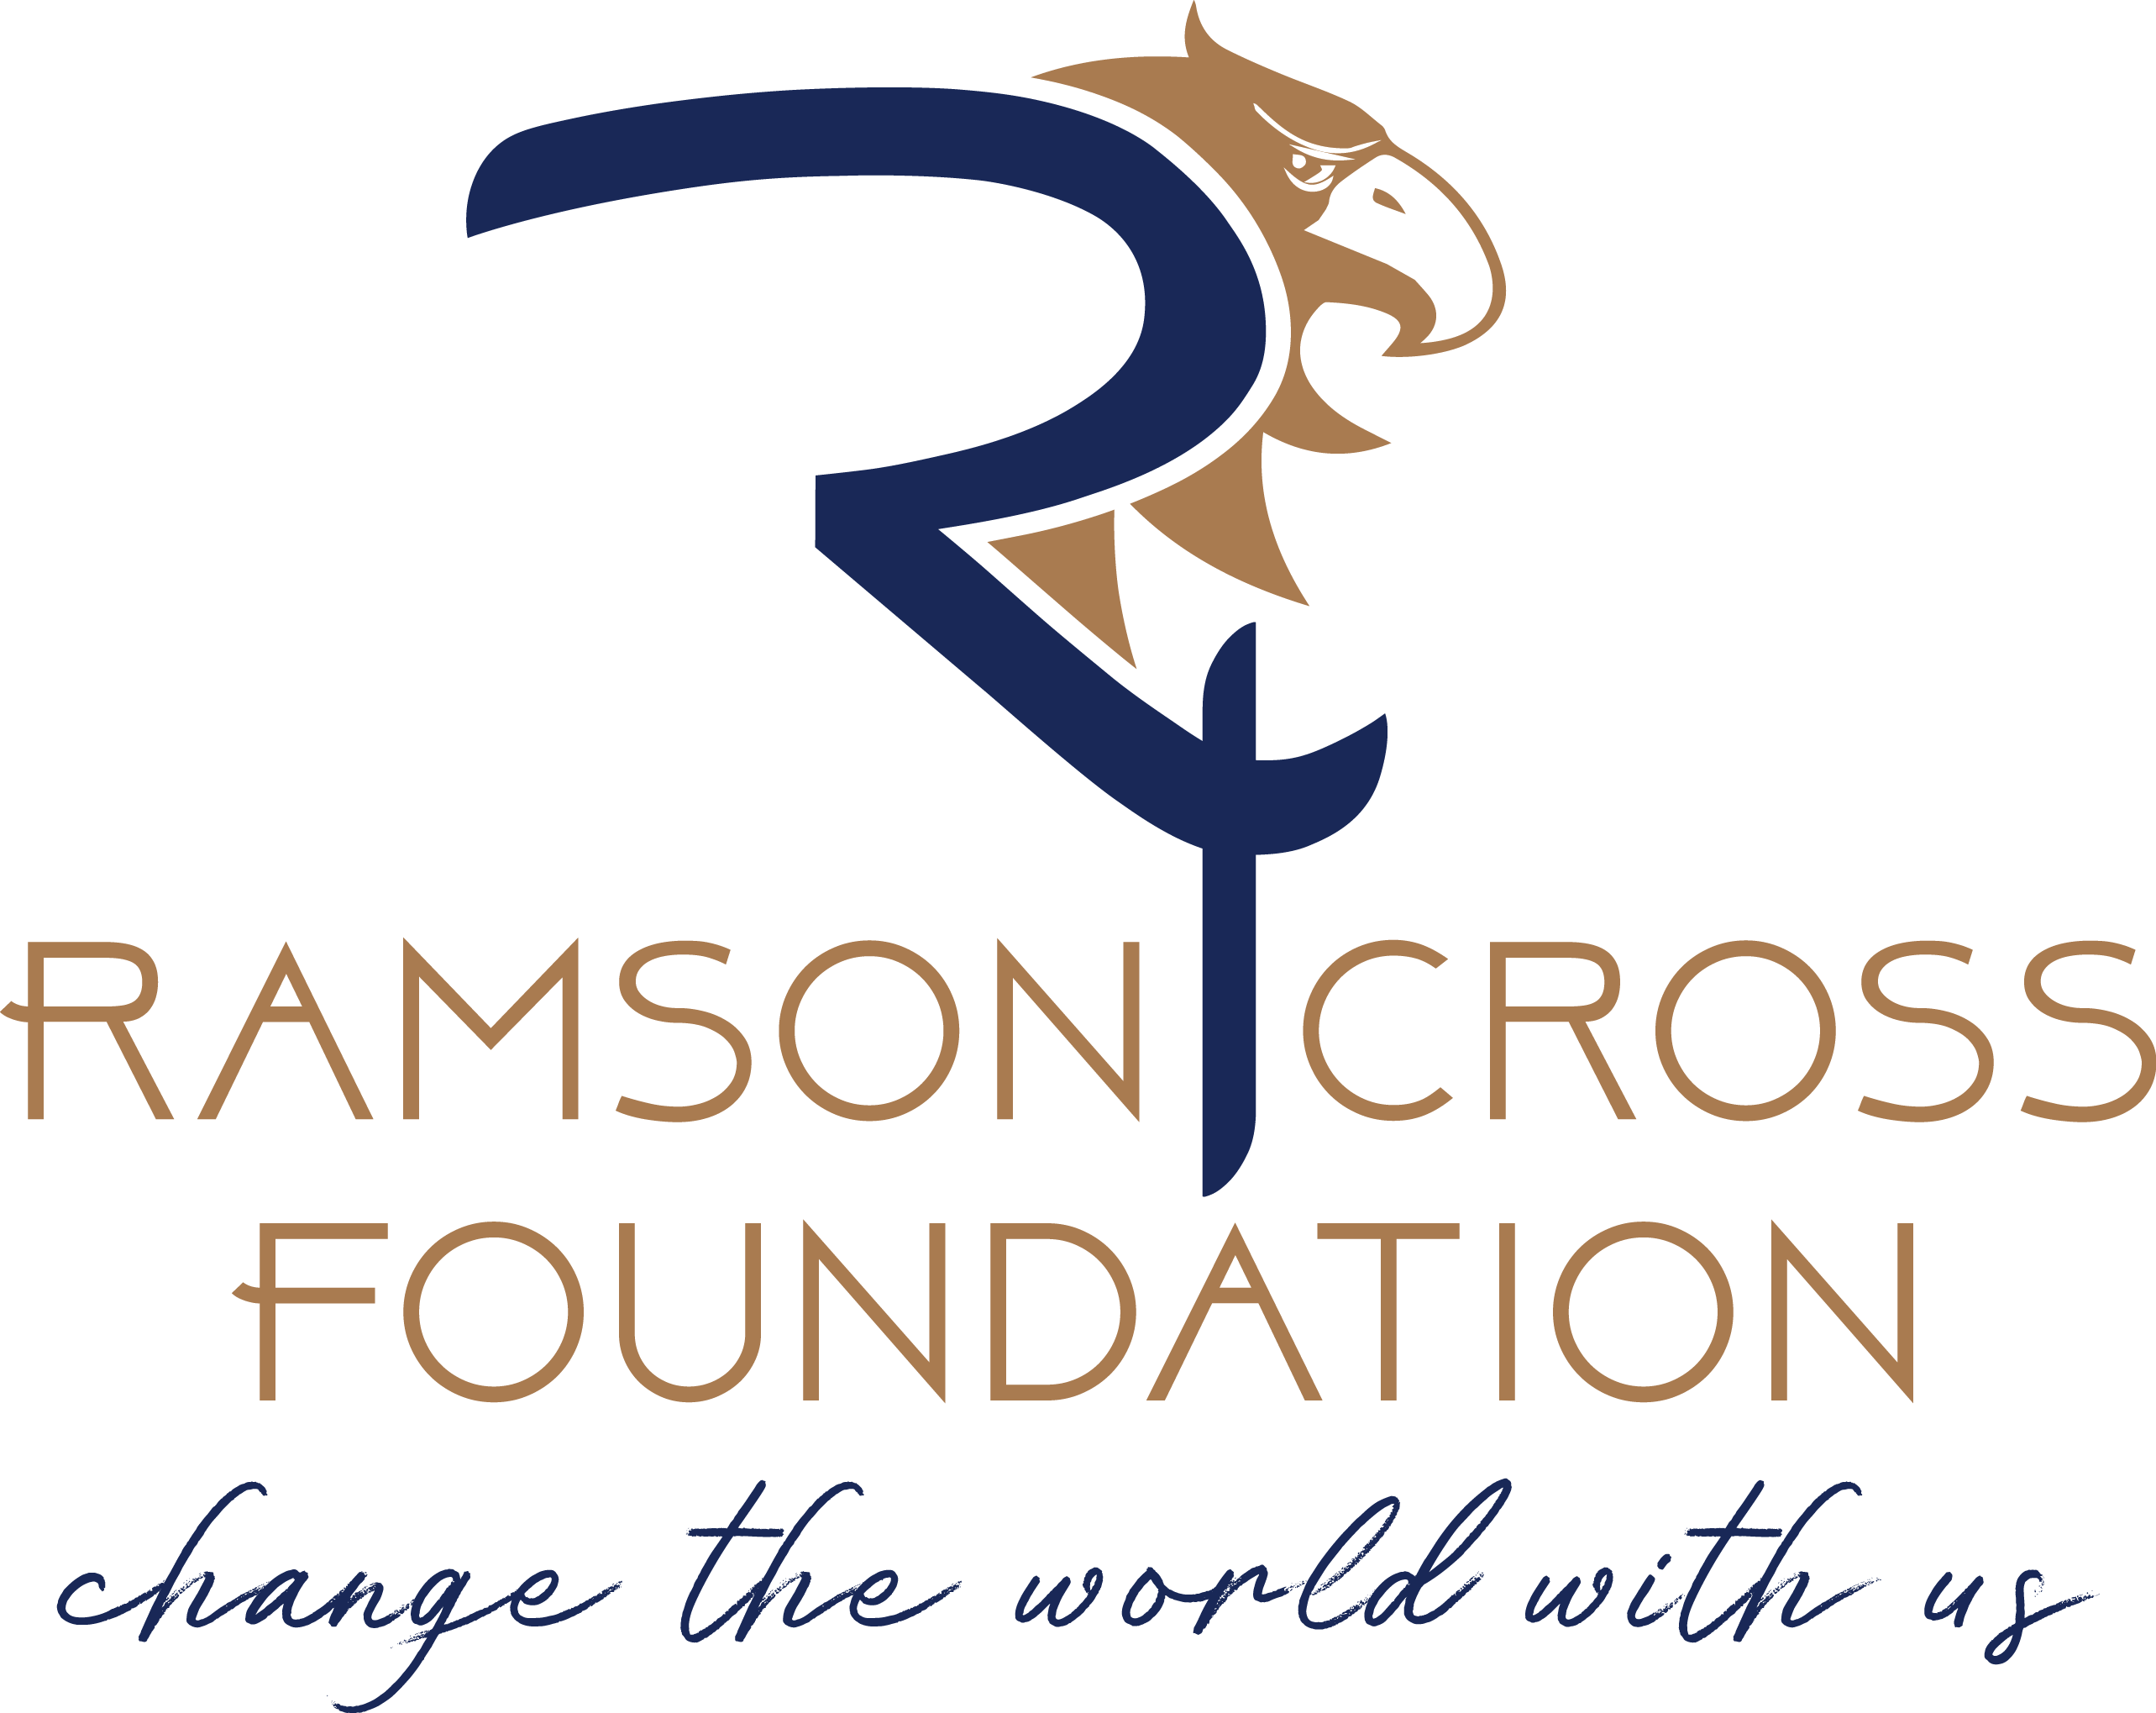 Ramson Cross Foundation